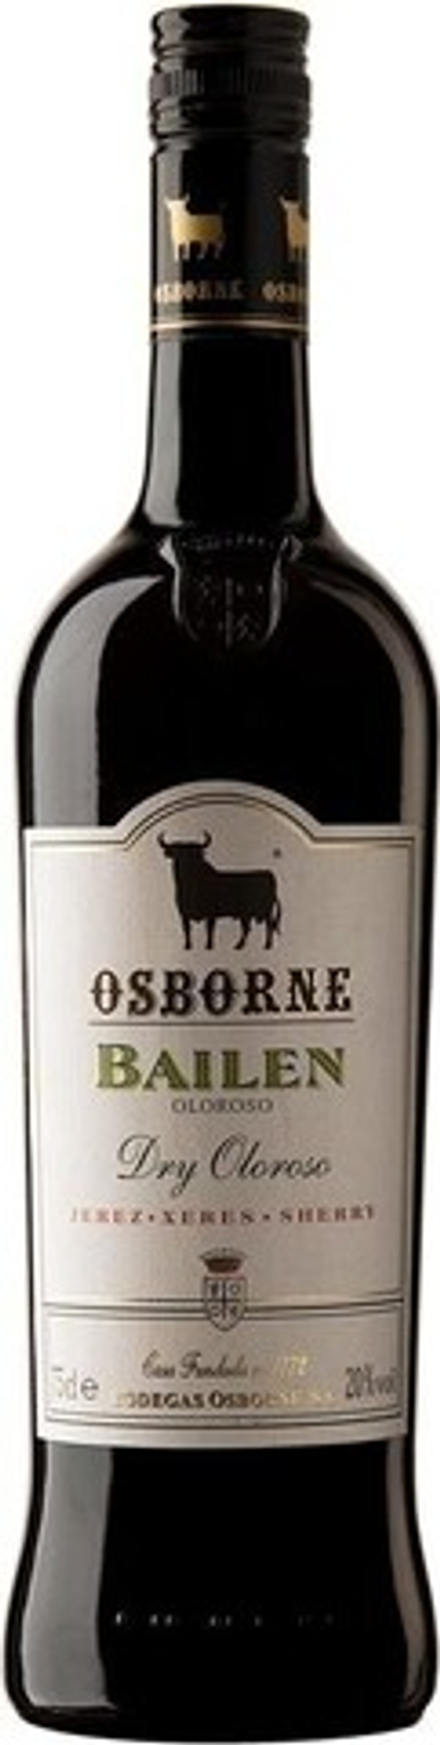 Херес Osborne Bailen Dry Oloroso, 0,75 л.